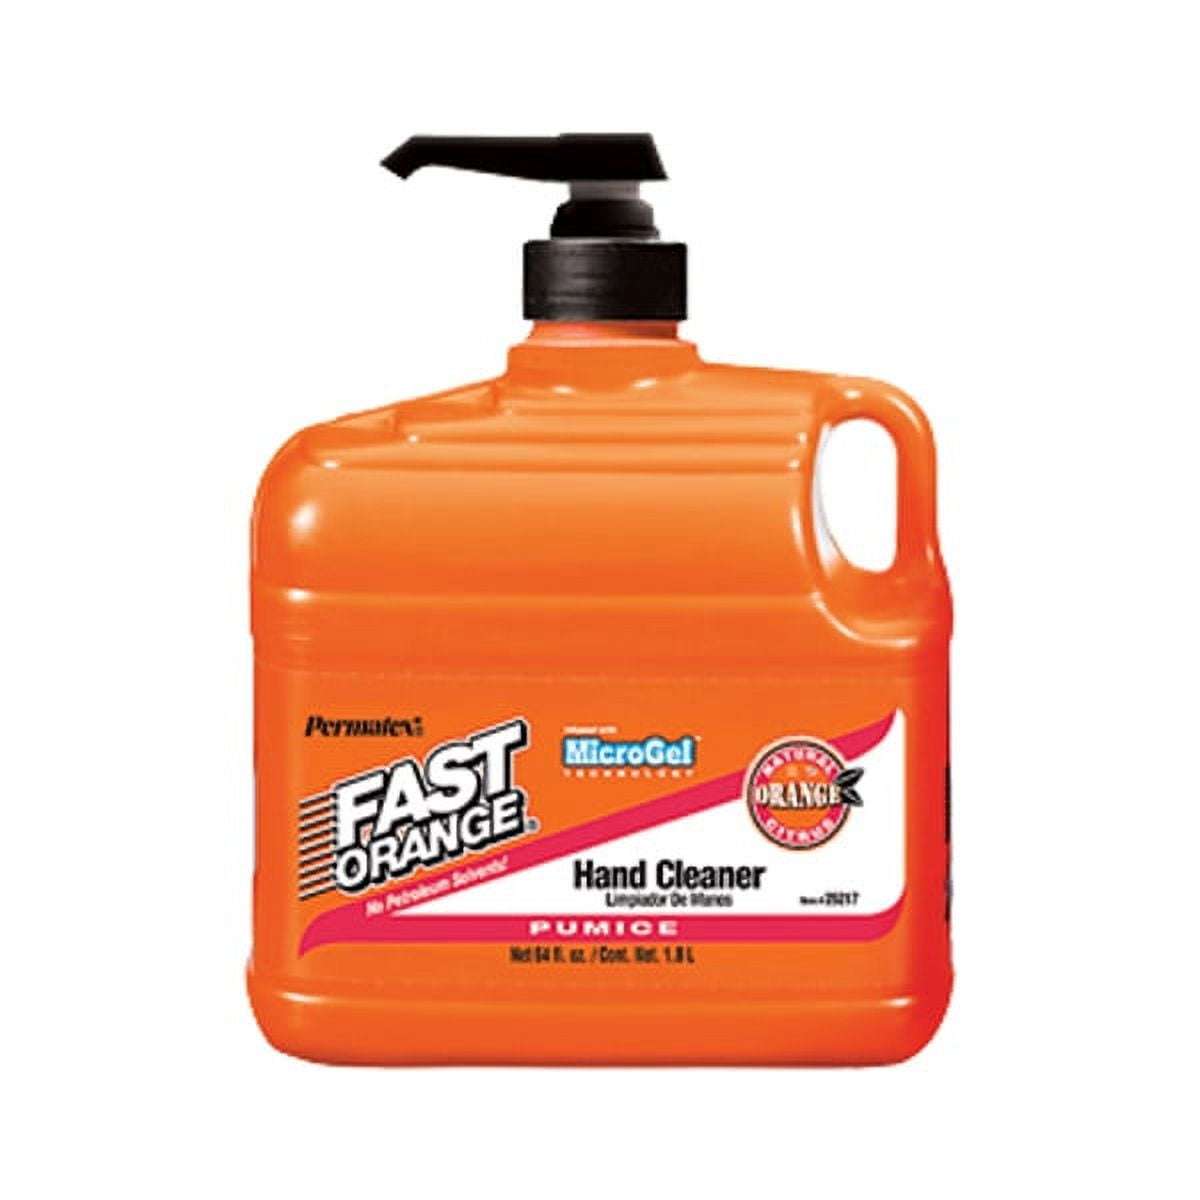 ZA@ MICROGEL Fast Orange Hand Cleaner 128oz 1 gallon Pumice Lotion